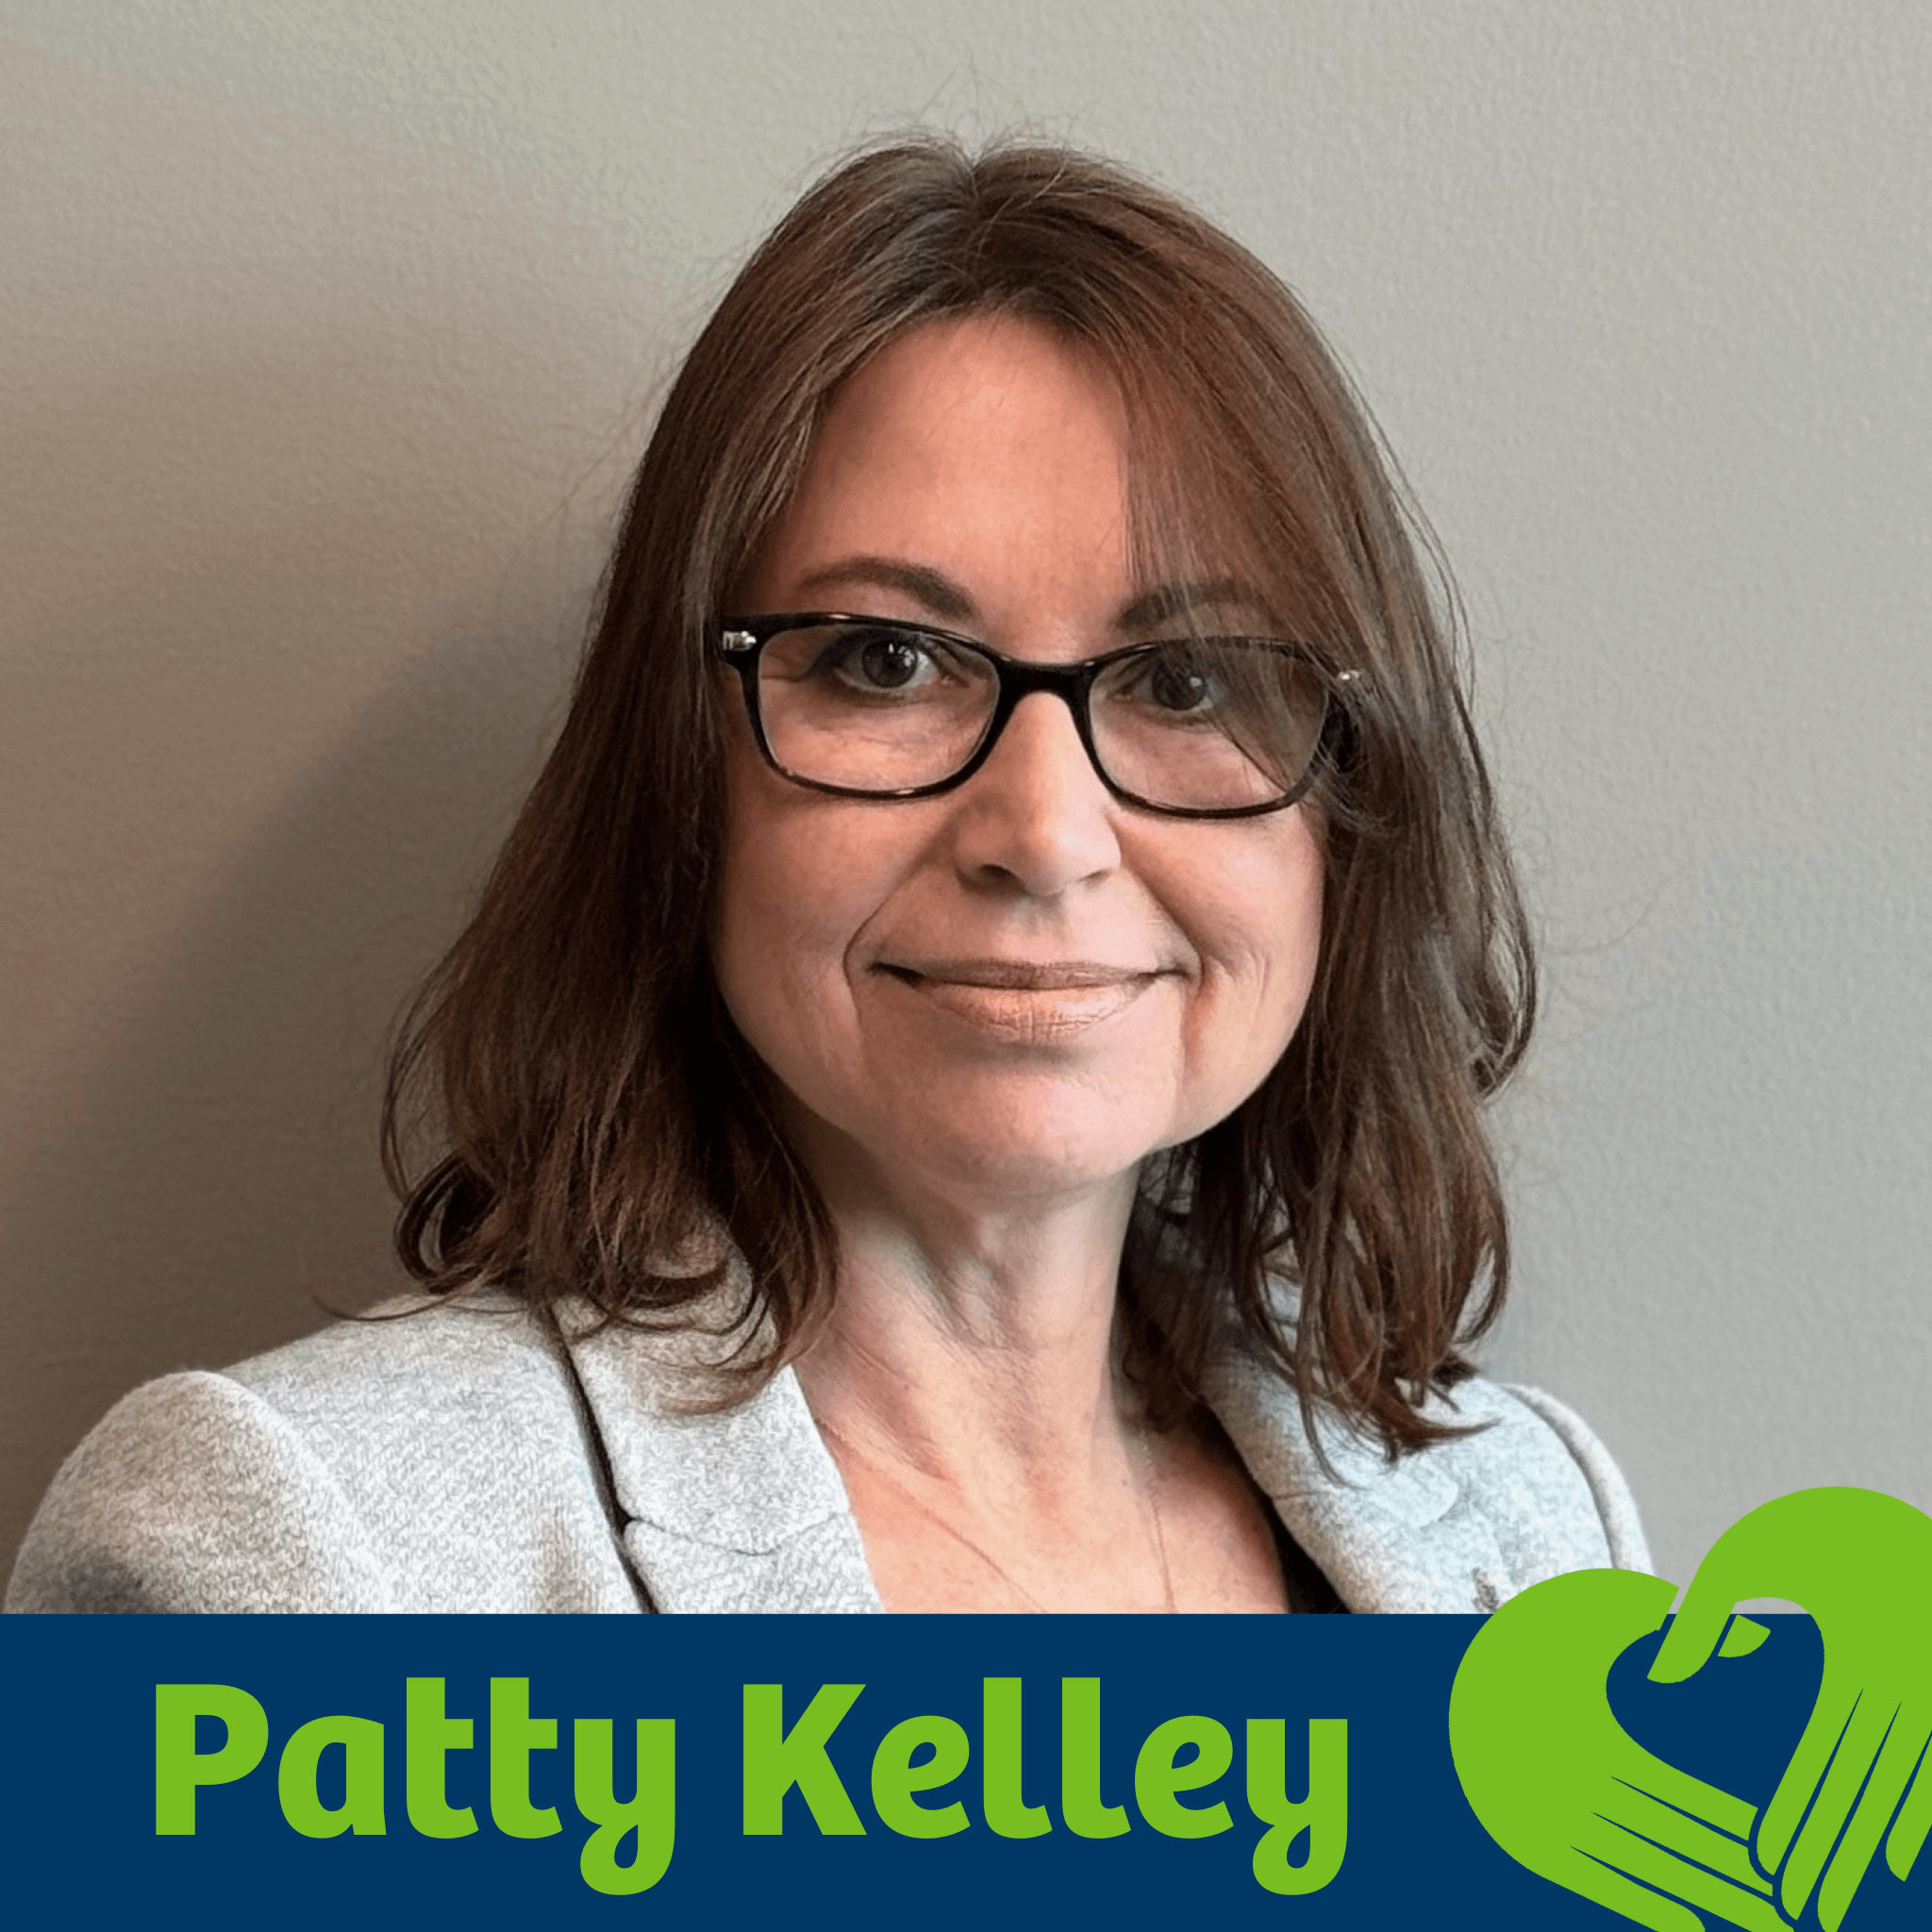 Patty Kelley